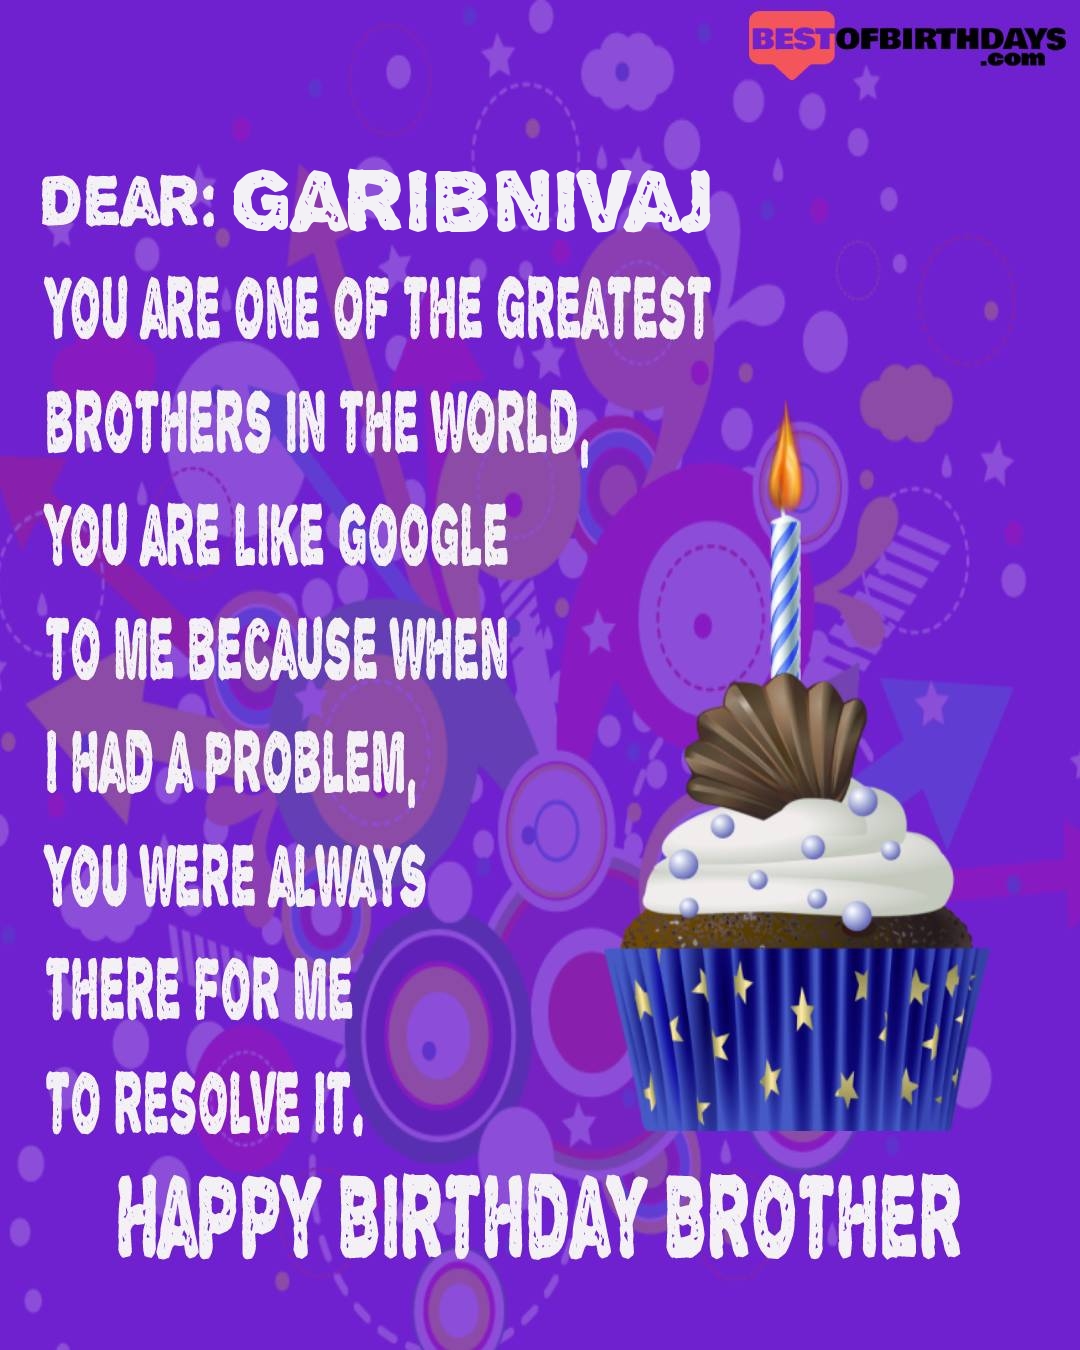 Happy birthday garibnivaj bhai brother bro